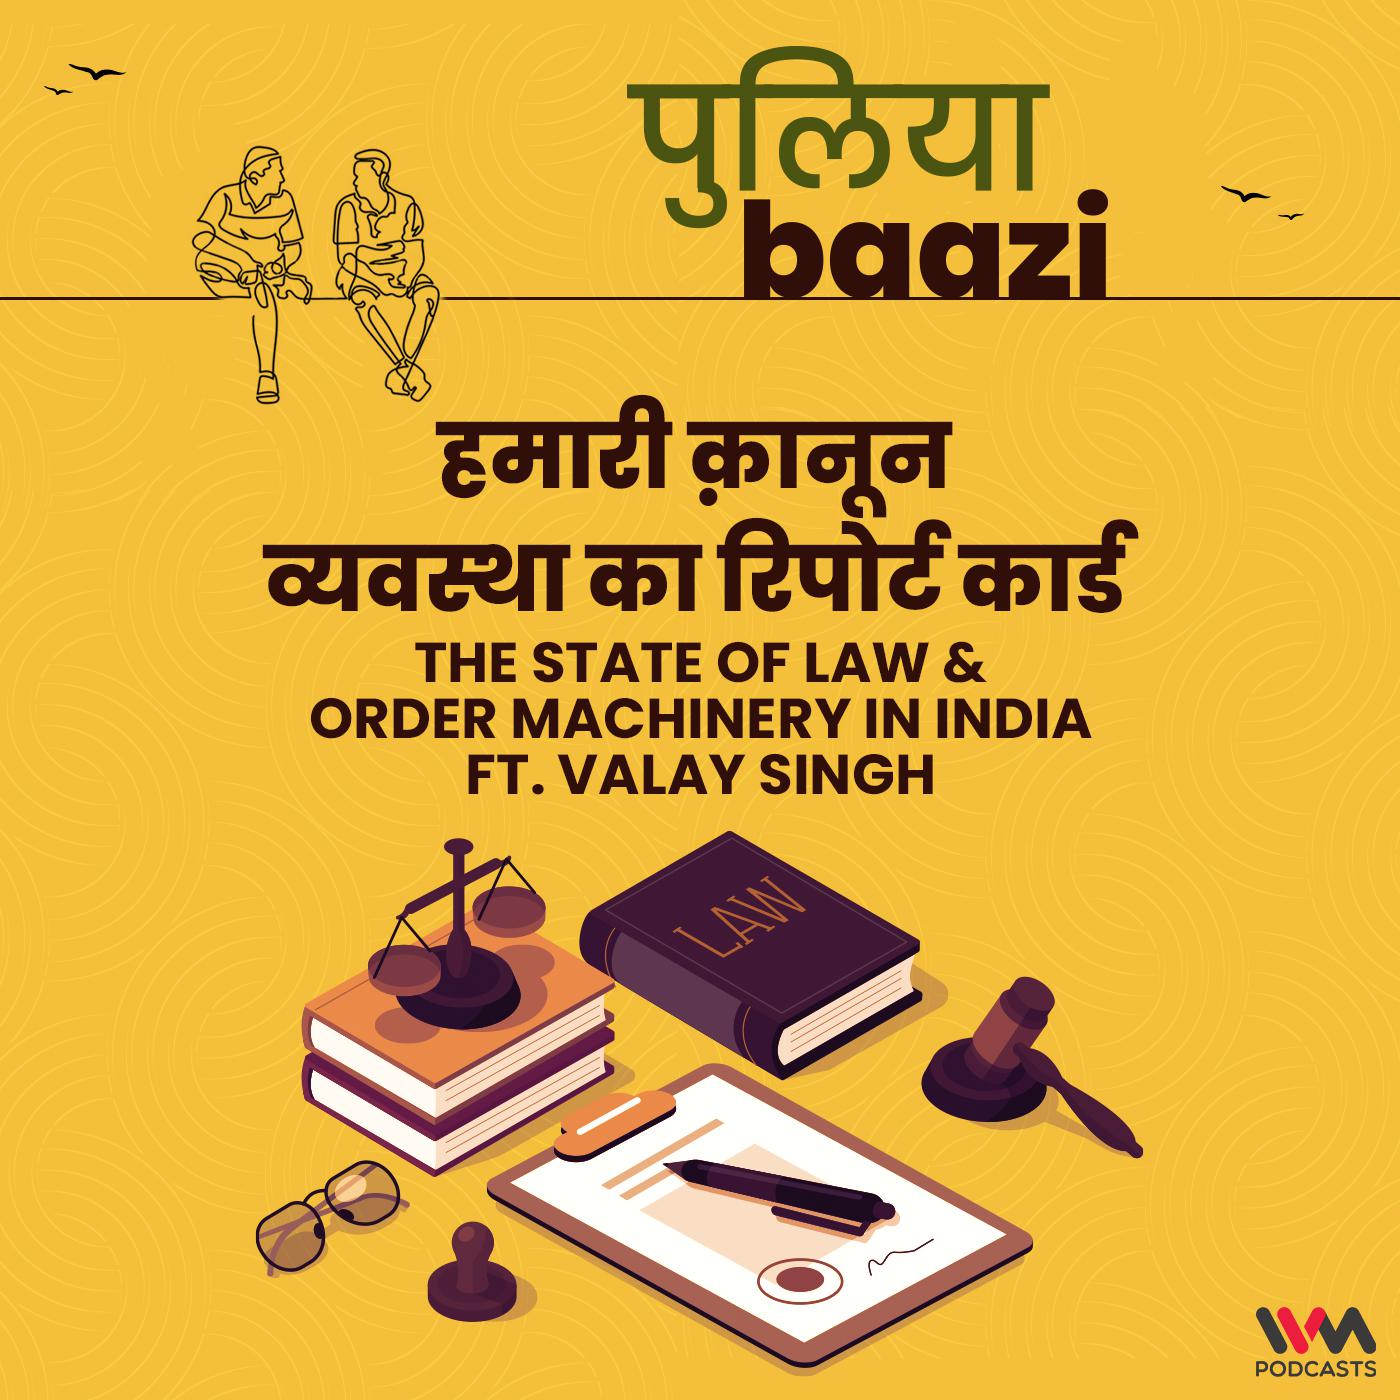 हमारी क़ानून व्यवस्था का रिपोर्ट कार्ड. The State of Law & Order Machinery in India.